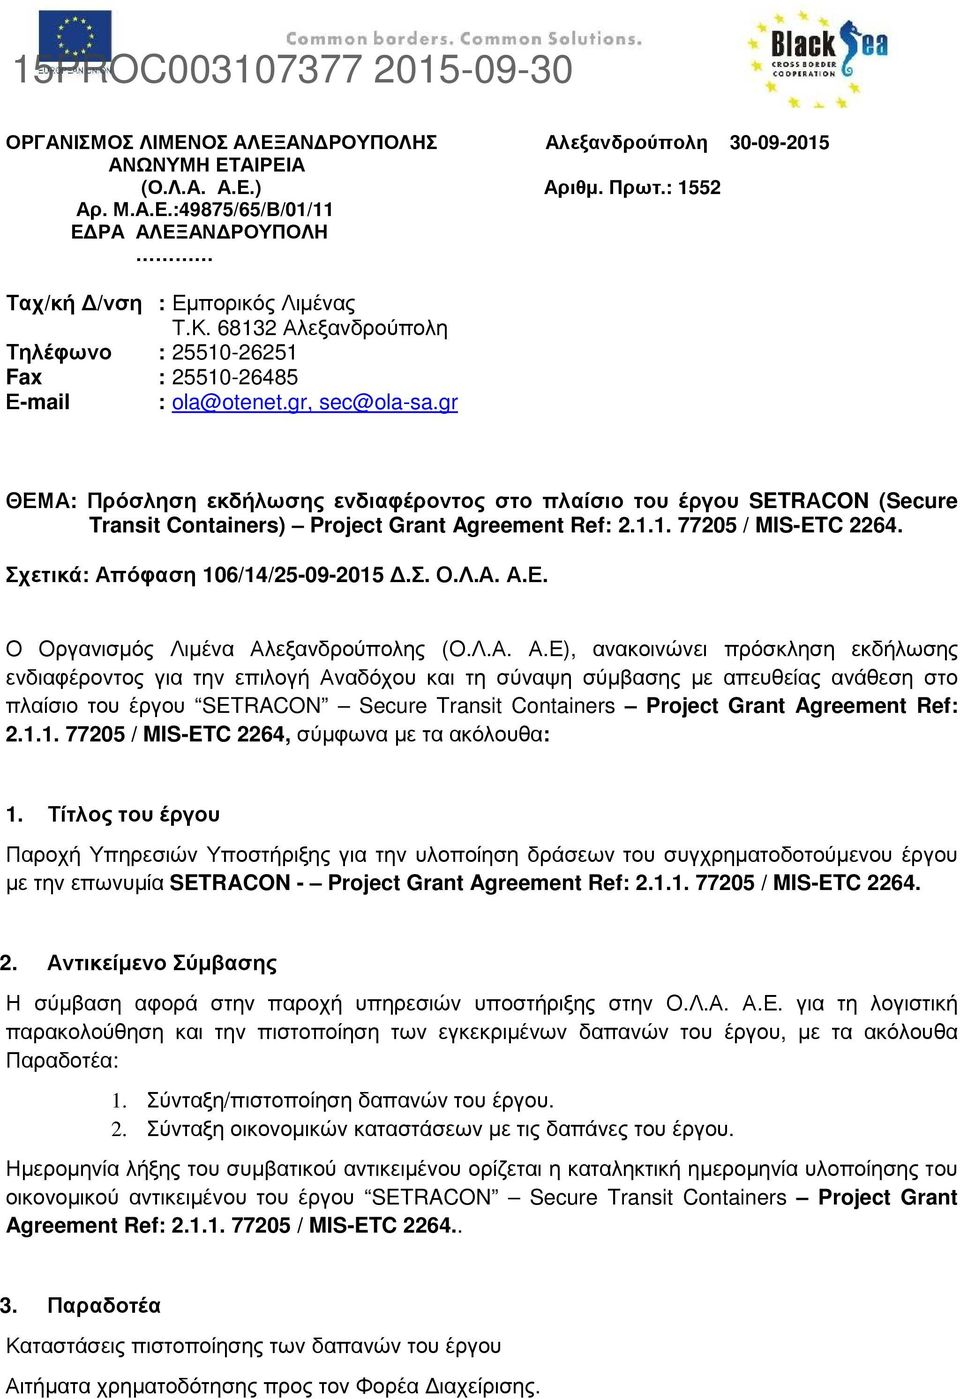 gr ΘΕΜΑ: Πρόσληση εκδήλωσης ενδιαφέροντος στο πλαίσιο του έργου SETRΑCON (Secure Transit Containers) Project Grant Agreement Ref: 2.1.1. 77205 / MIS-ETC 2264. Σχετικά: Απόφαση 106/14/25-09-2015.Σ. Ο.